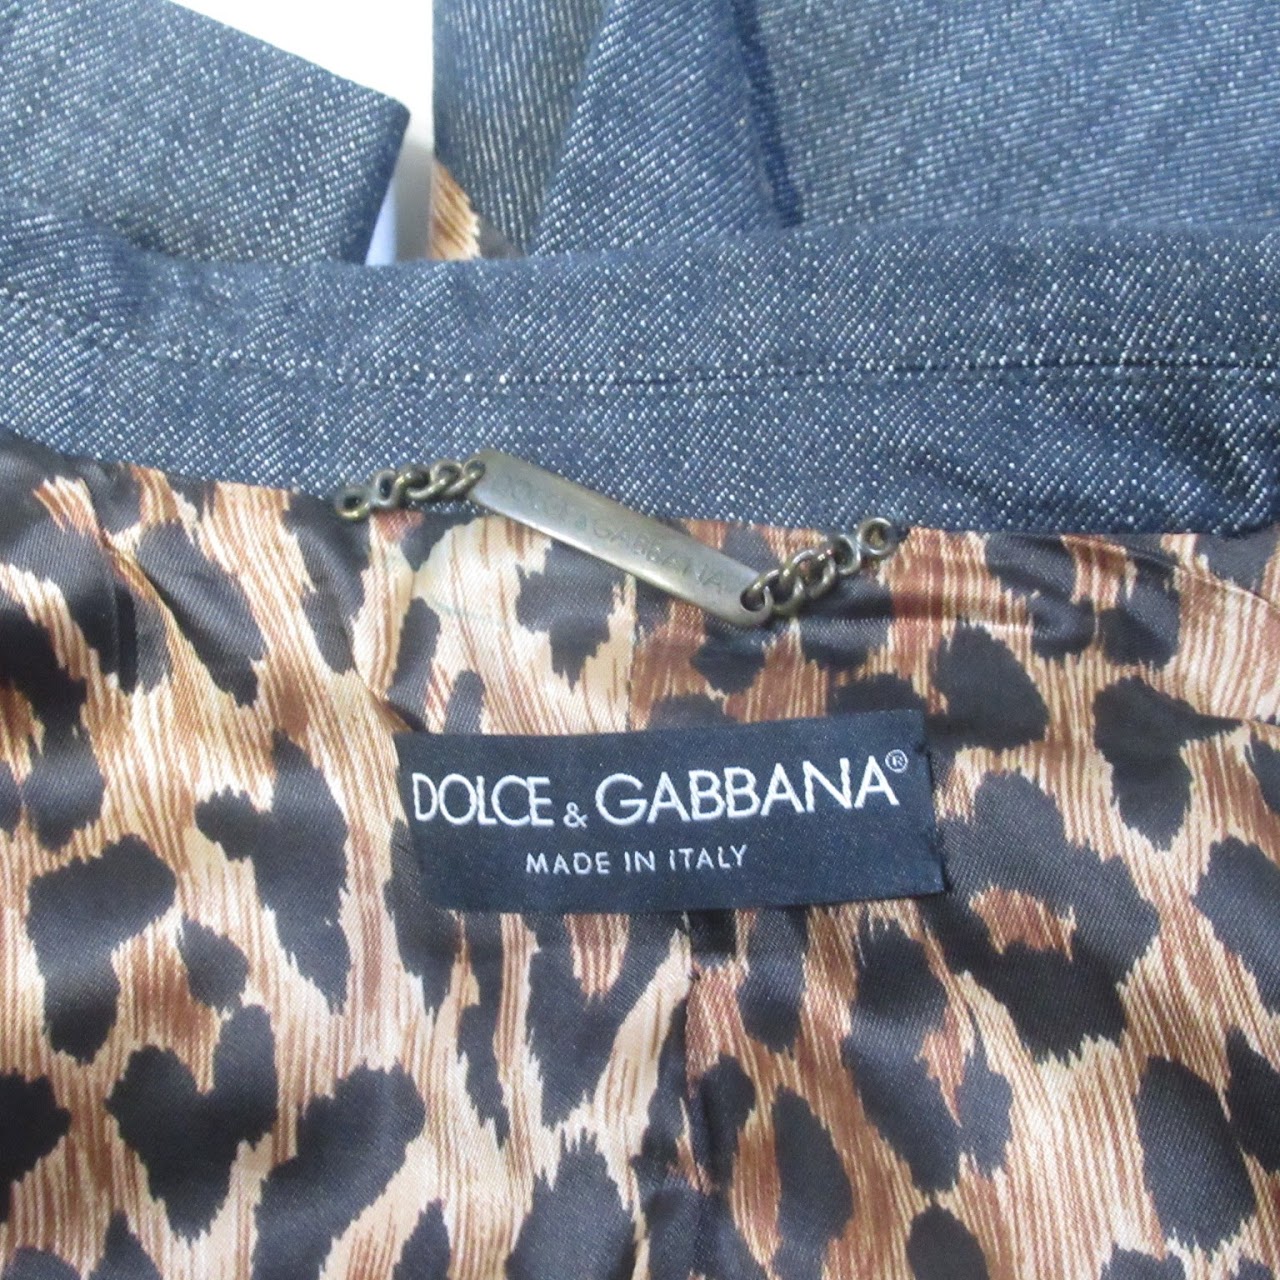 Dolce & Gabbana Denim Duster